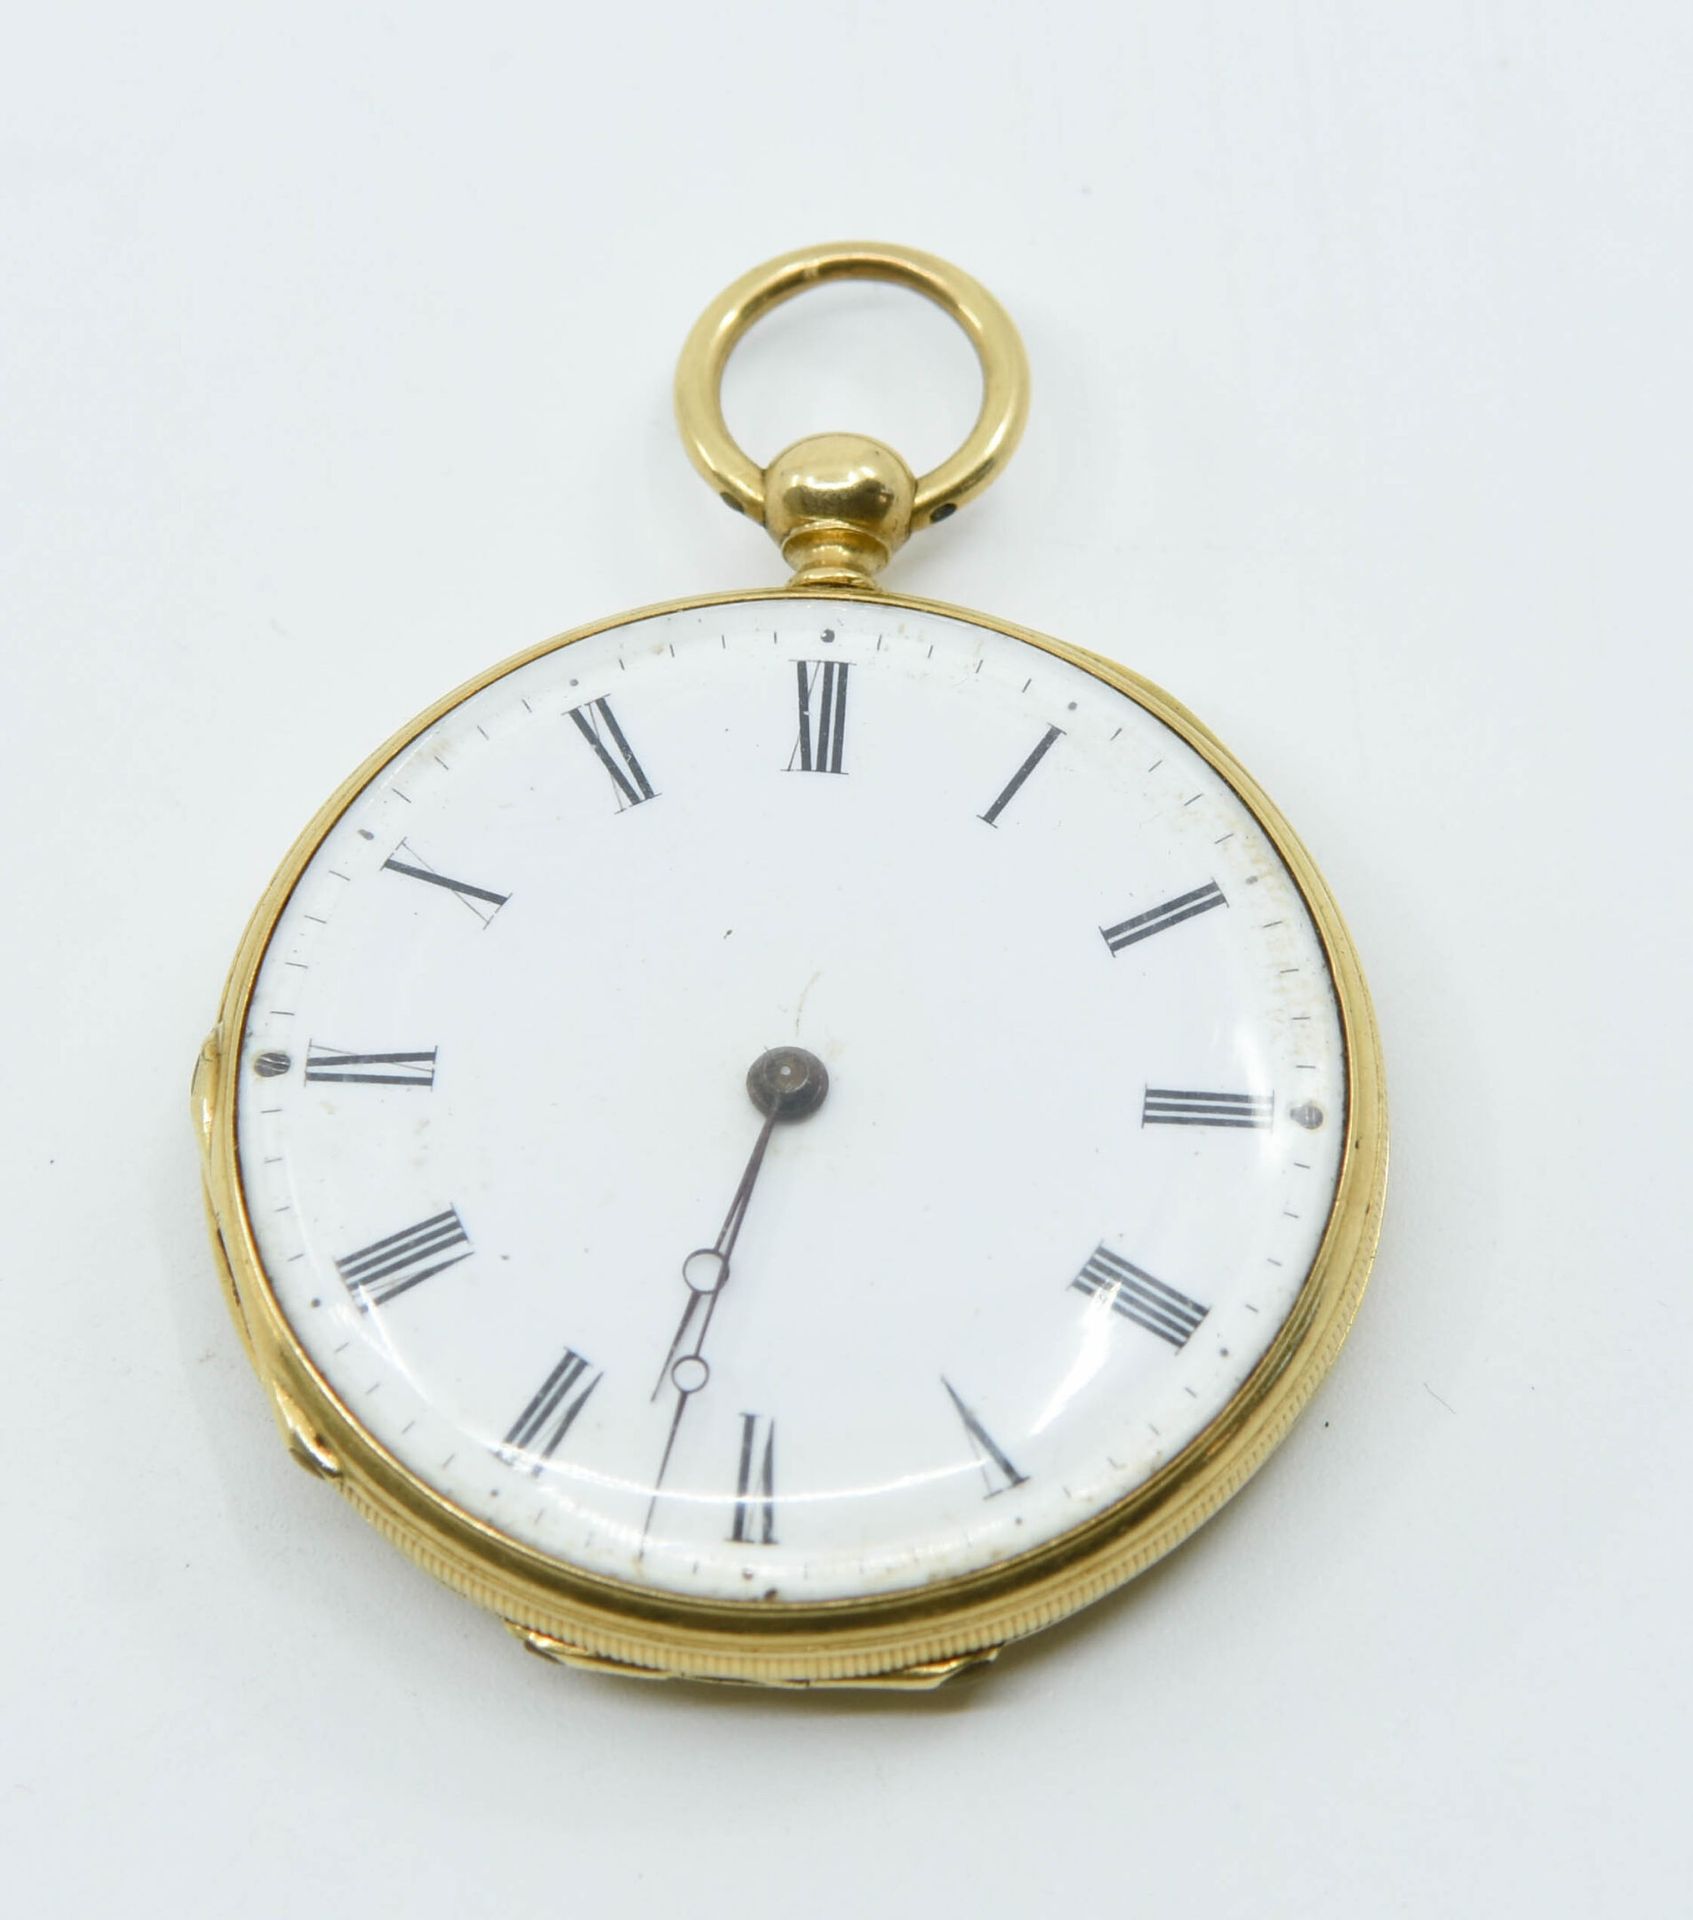 Null ROBERT FAVRE et VIEUX in Geneva
Pocket watch in yellow gold (750 °/°°), the&hellip;